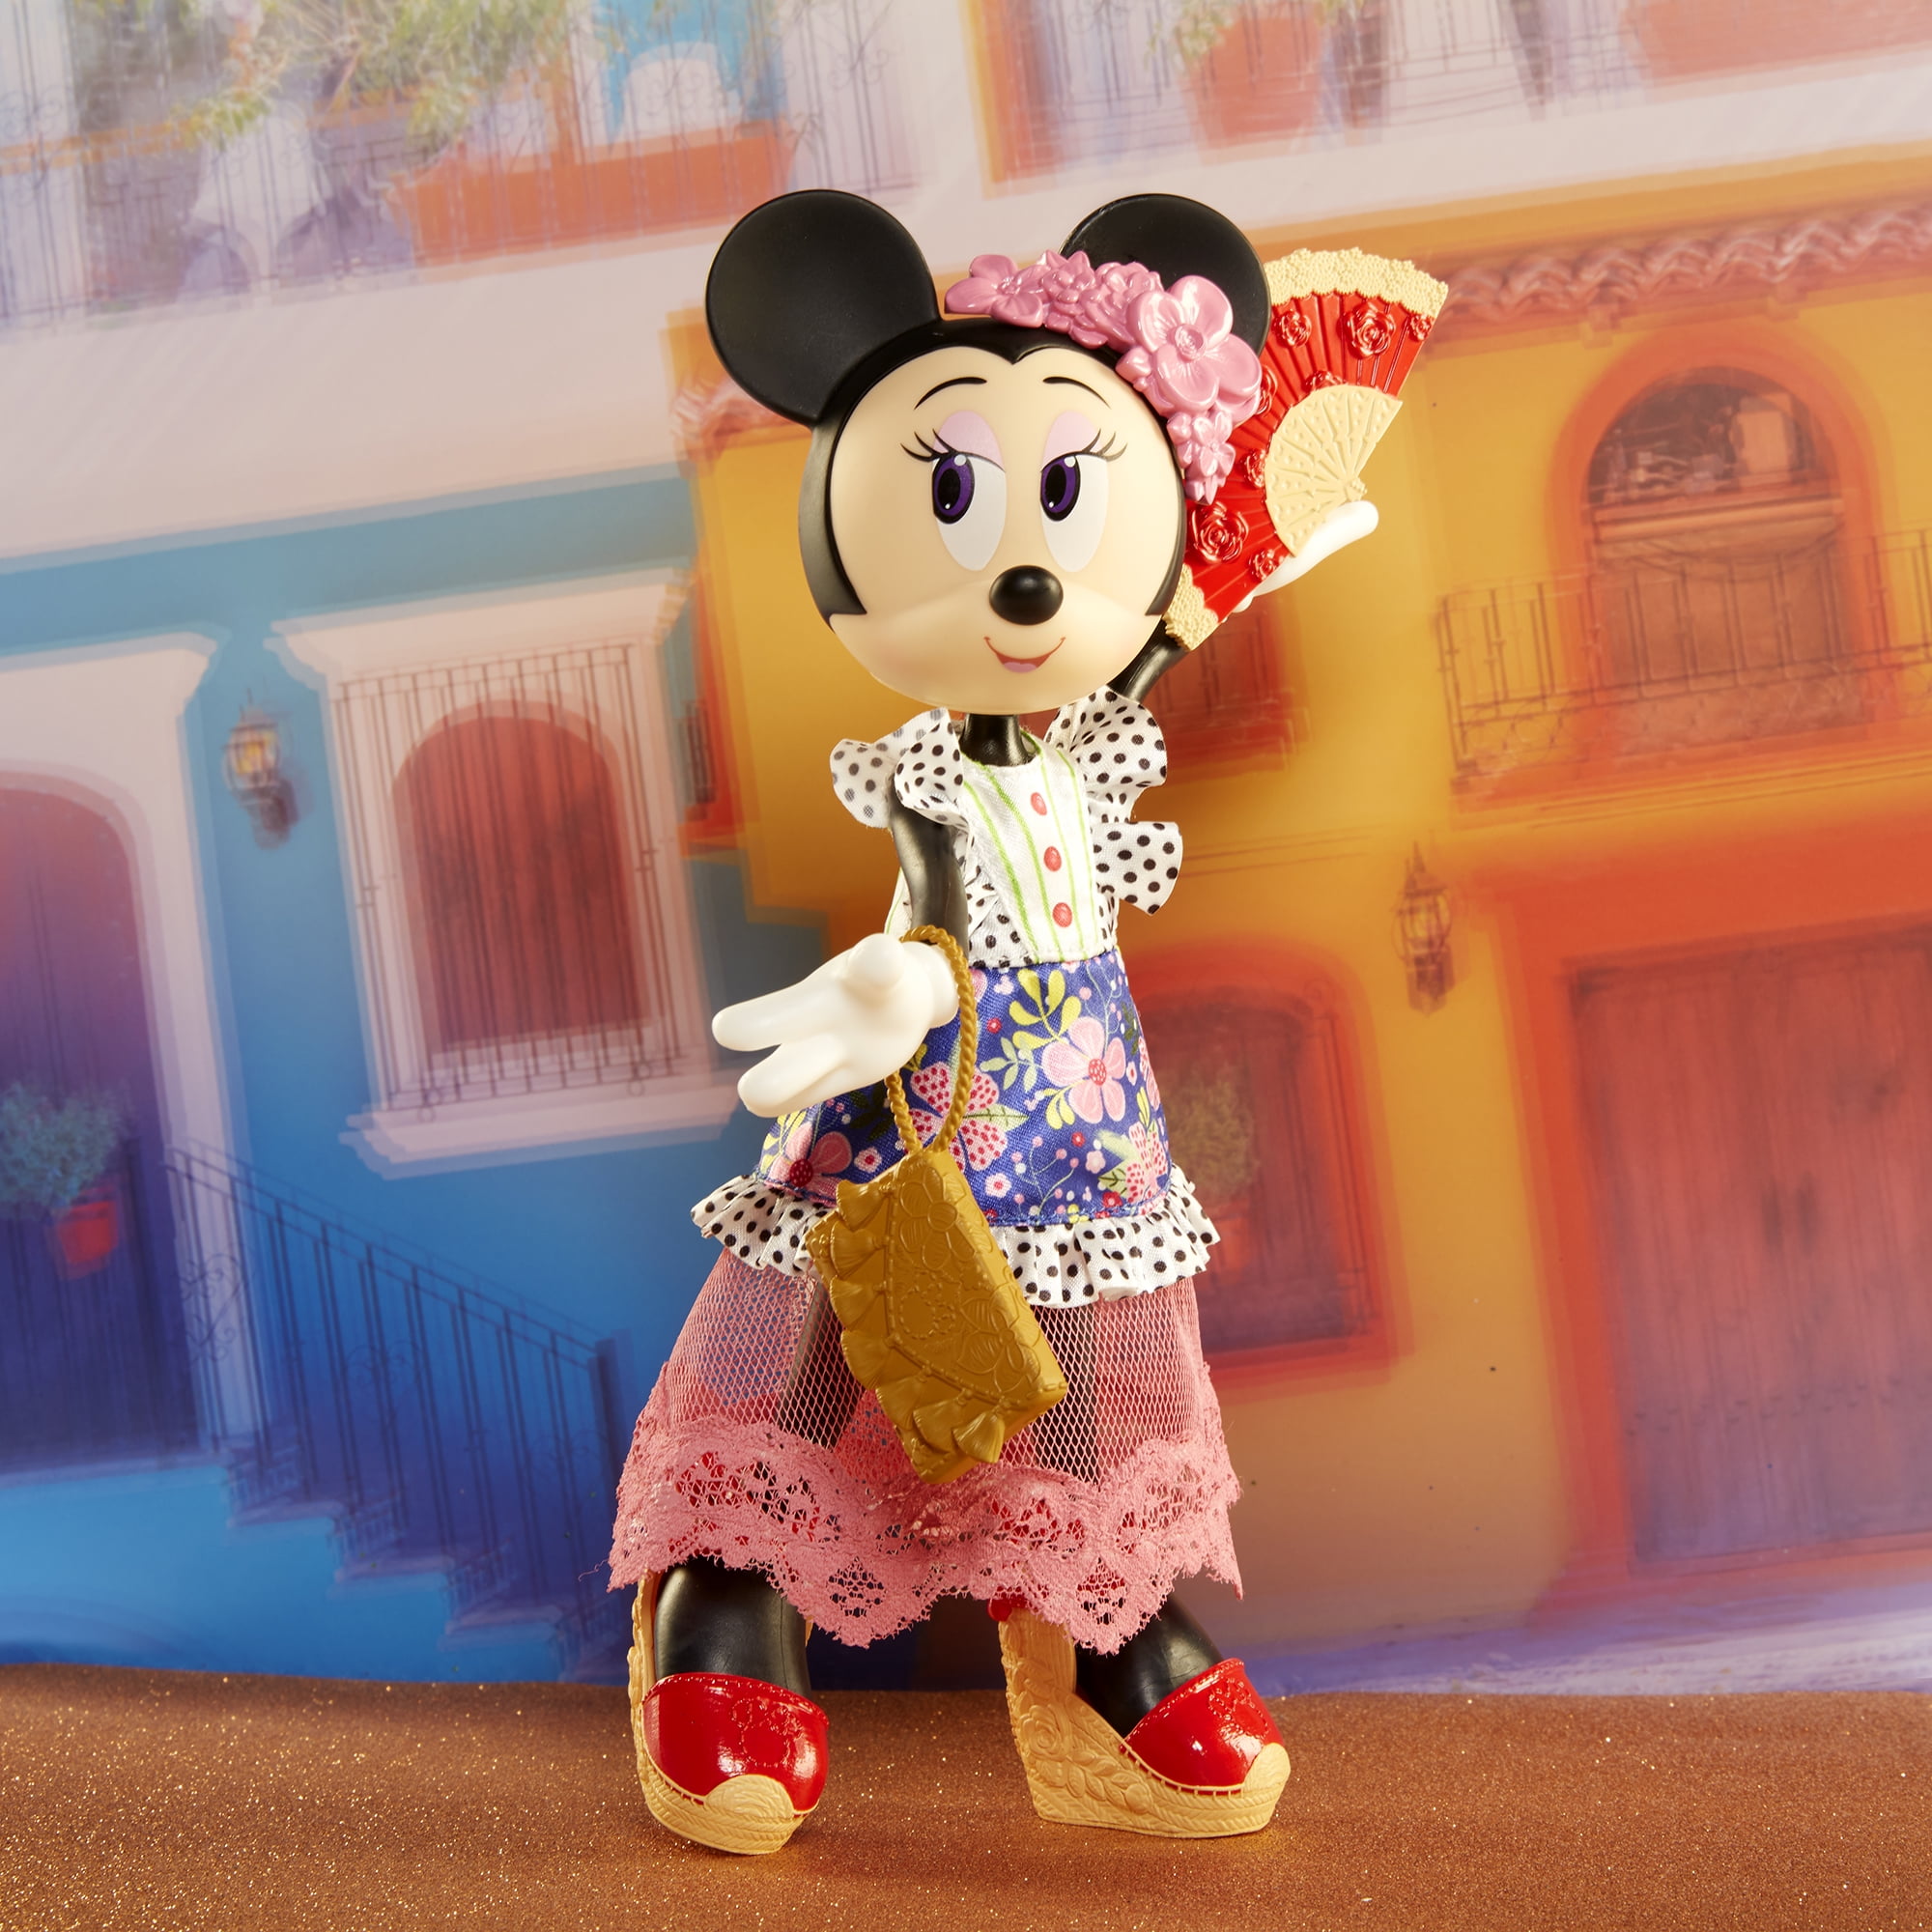 Disney Minnie Mouse City Style Poseable Fashion Doll 10” Jakks Age 3 for sale online 